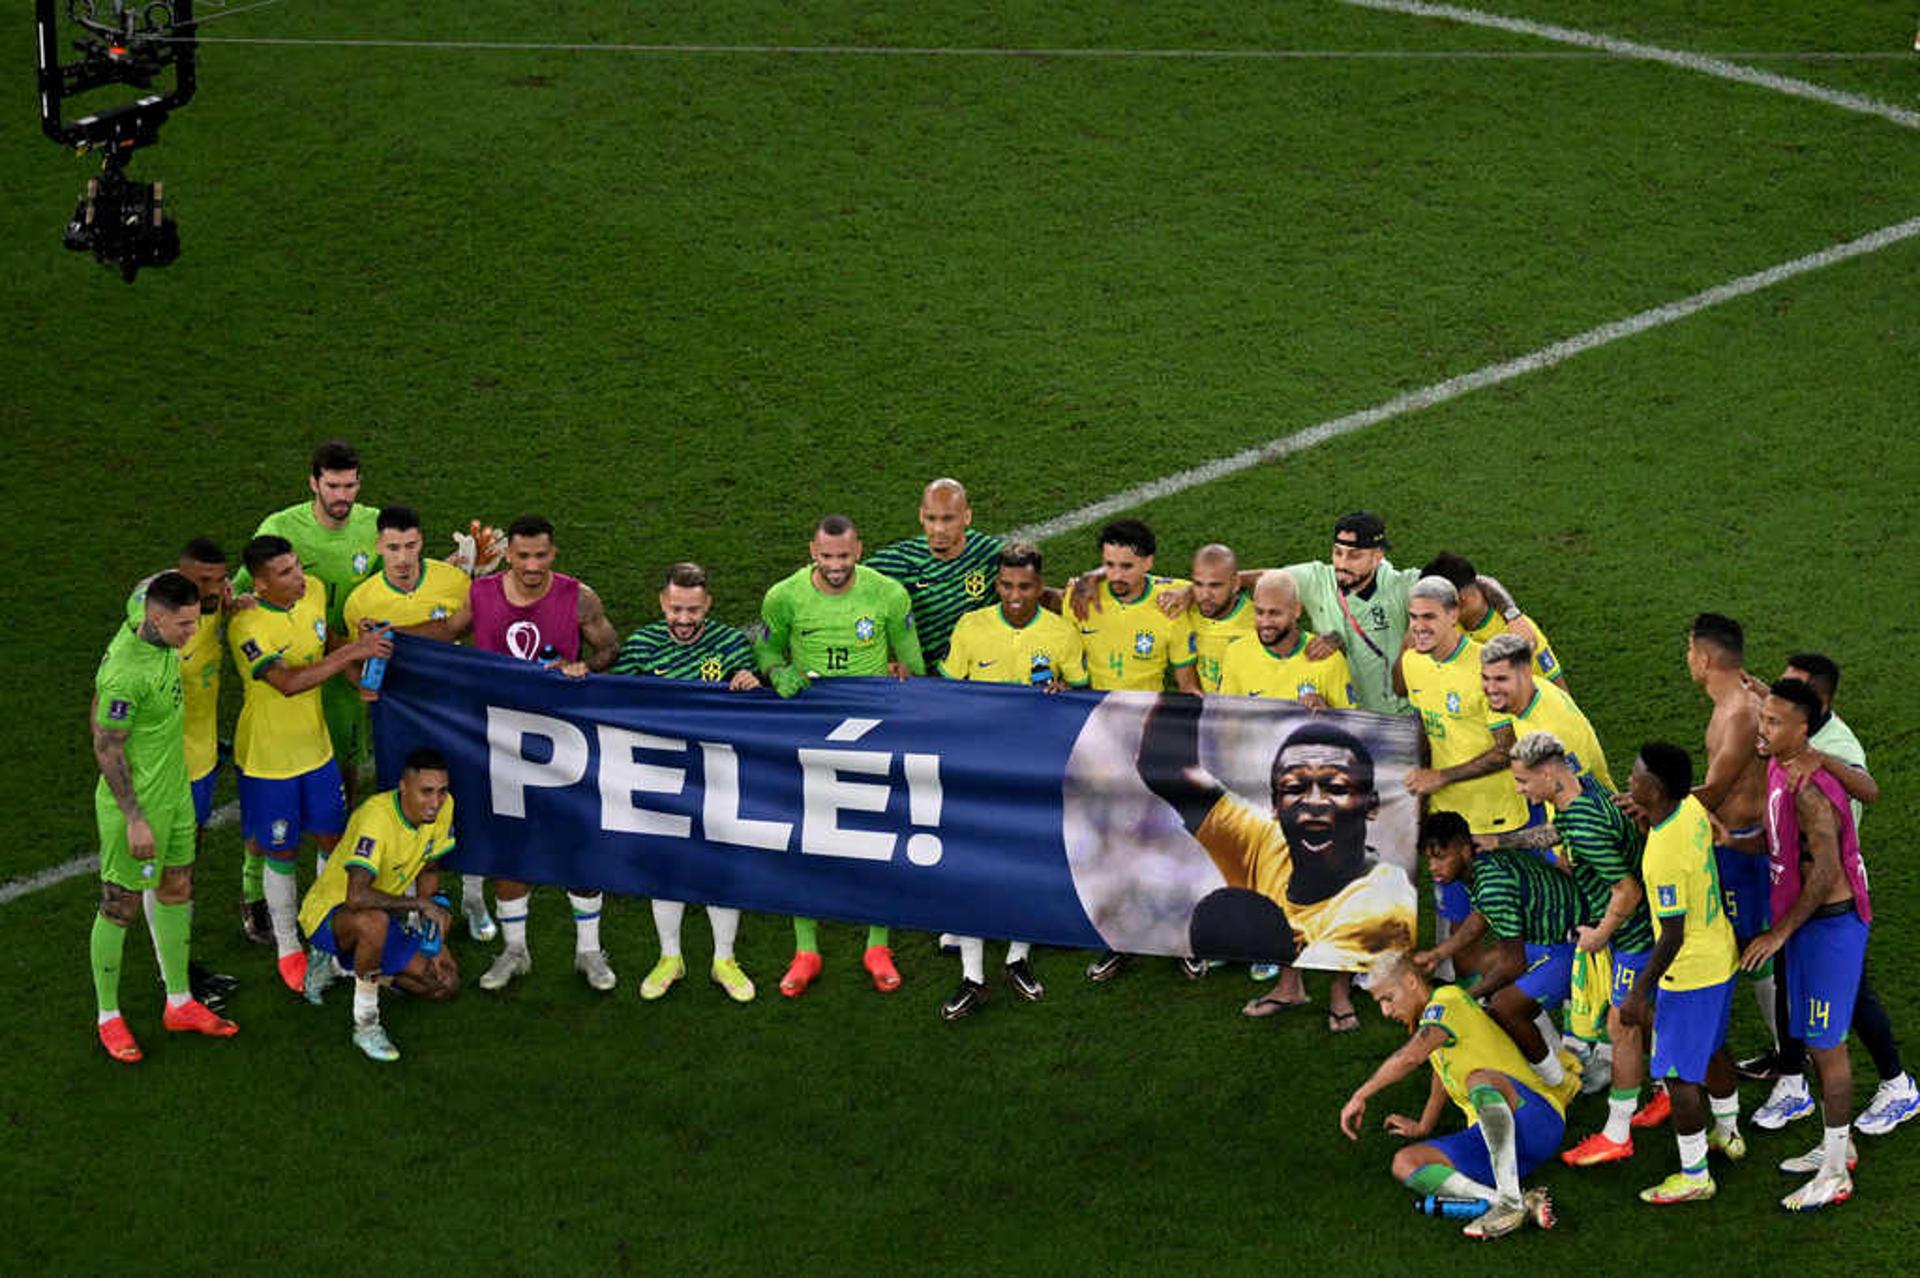 Brasil x Coreia - faixa Pelé - oitavas de final - Copa do Catar -